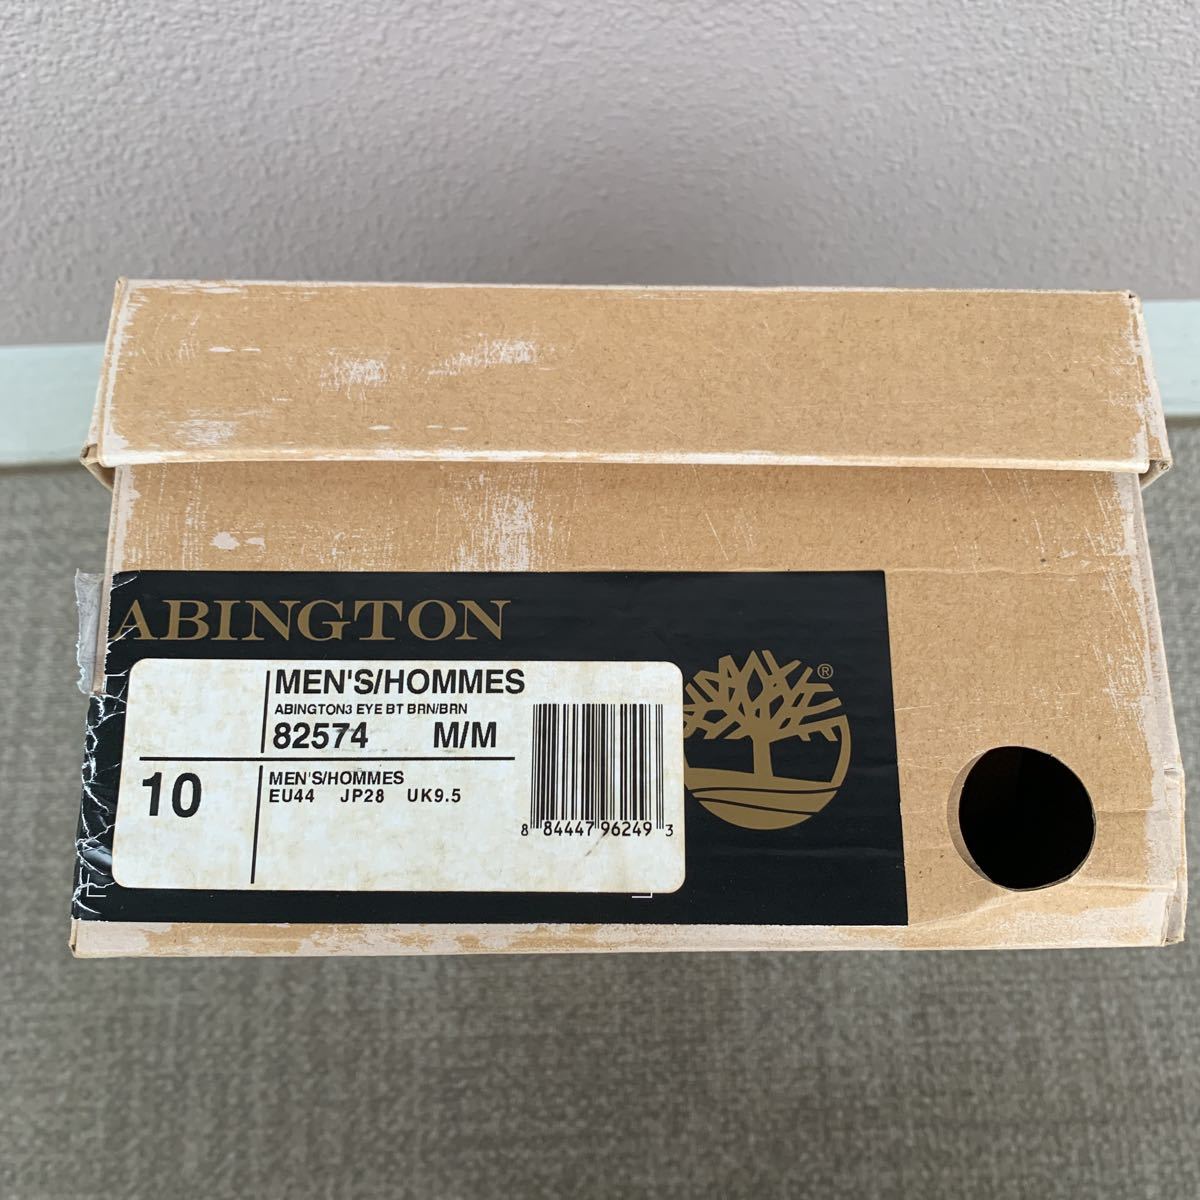 Abington Collection by Timberland 3EYE BOAT CLASSIC LUG デッキシューズ US10 CHARLES F. STEAD VIBRAM SHOE CAMPANY_画像10